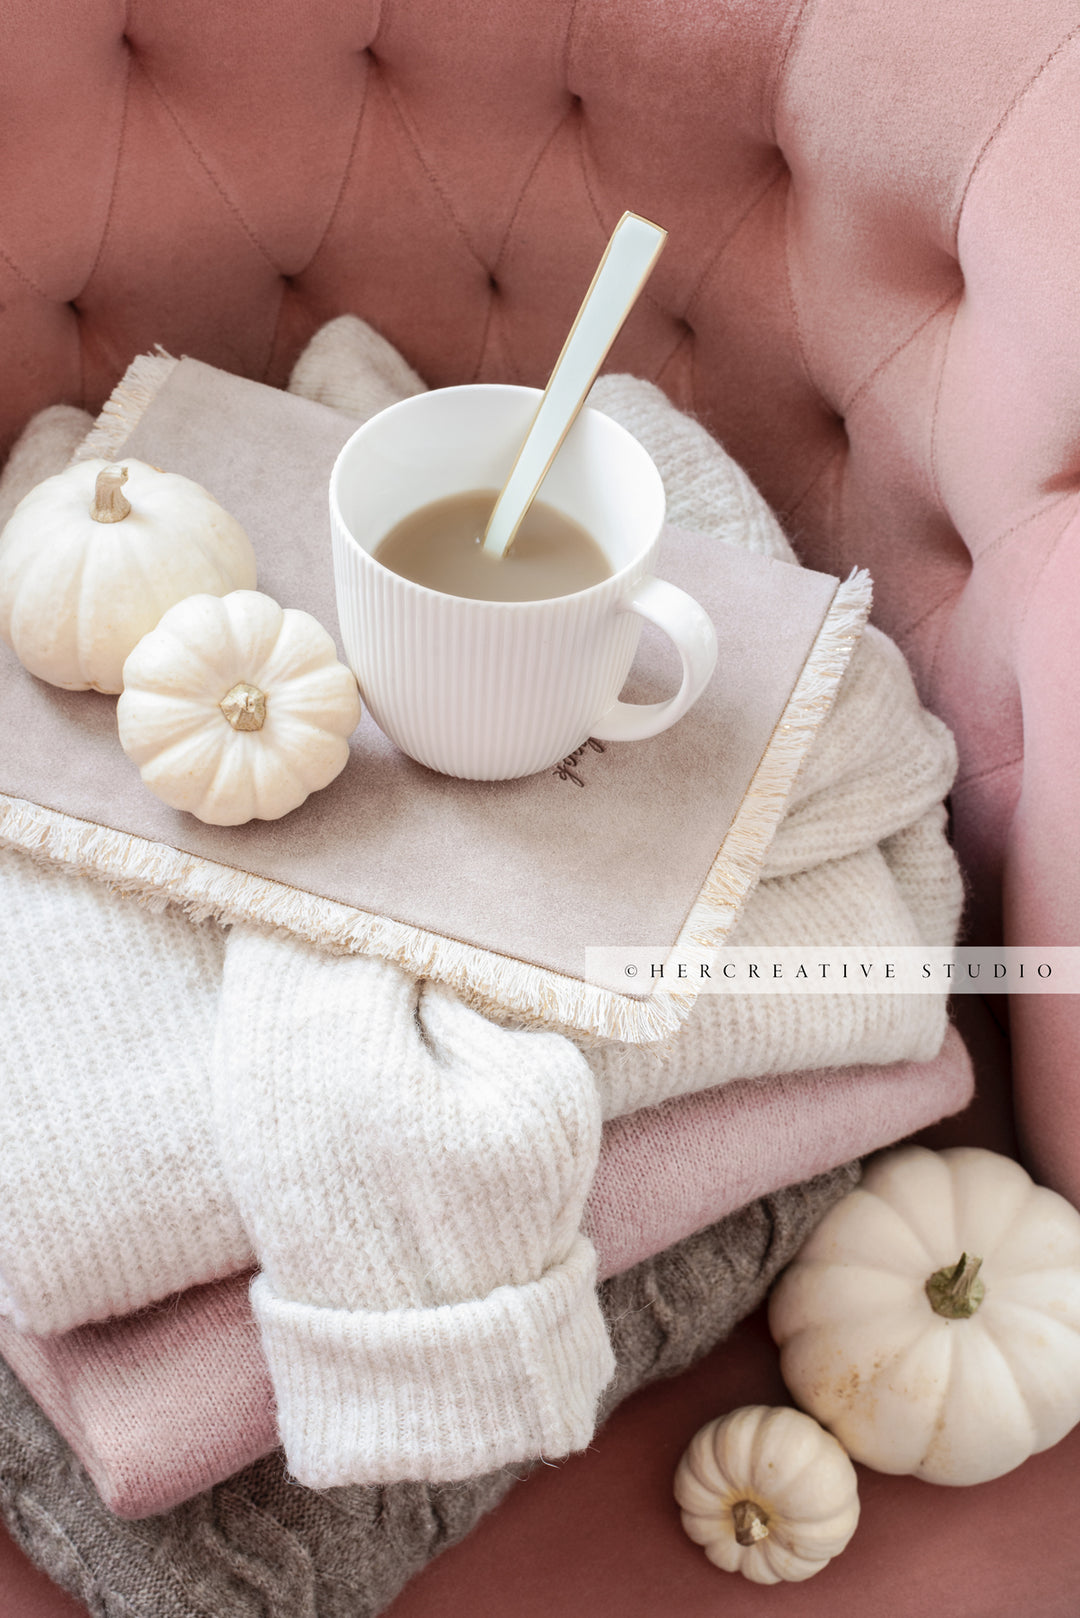 Tea, Pumpkins & Sweaters on Pink Chair. Digital Stock Image.